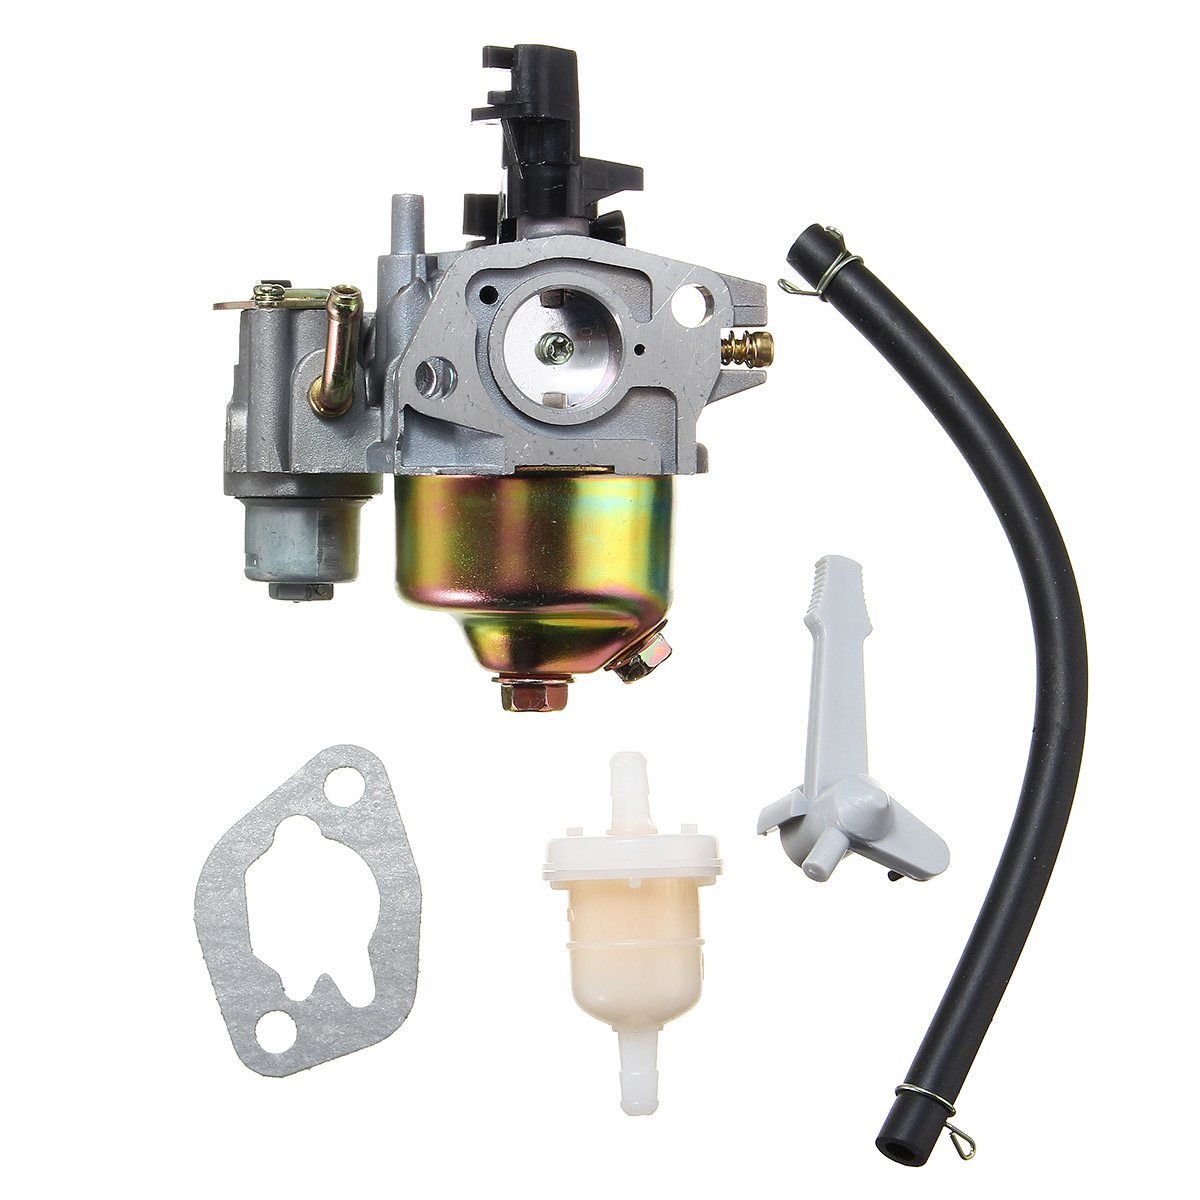 

Carburetor Filter Gasket Oil Pipe Kit For Honda GX160 5.5HP GX200 16100-ZH8-W61